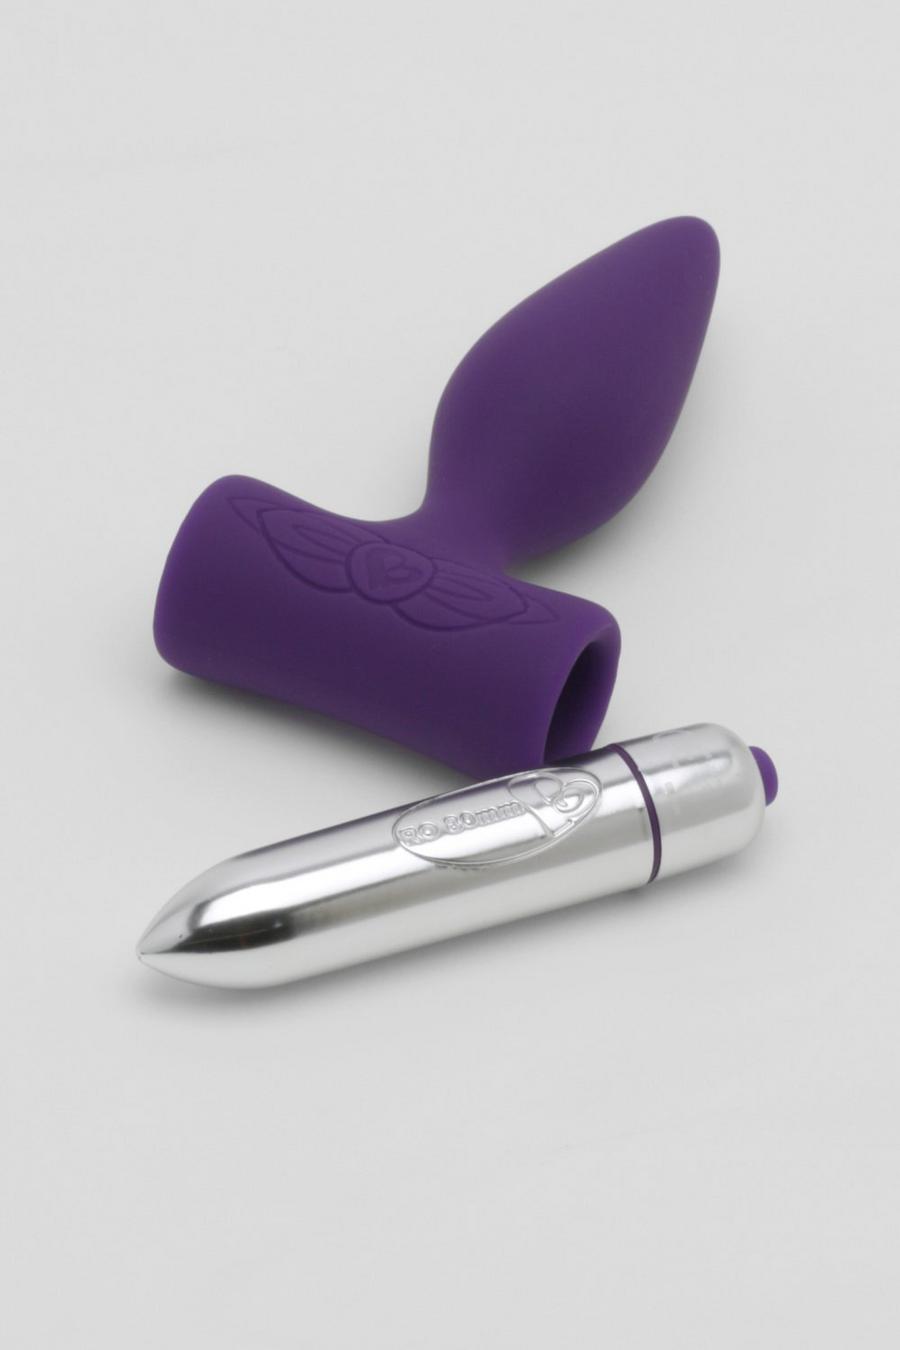 Petite Sensations Plug, Purple violet